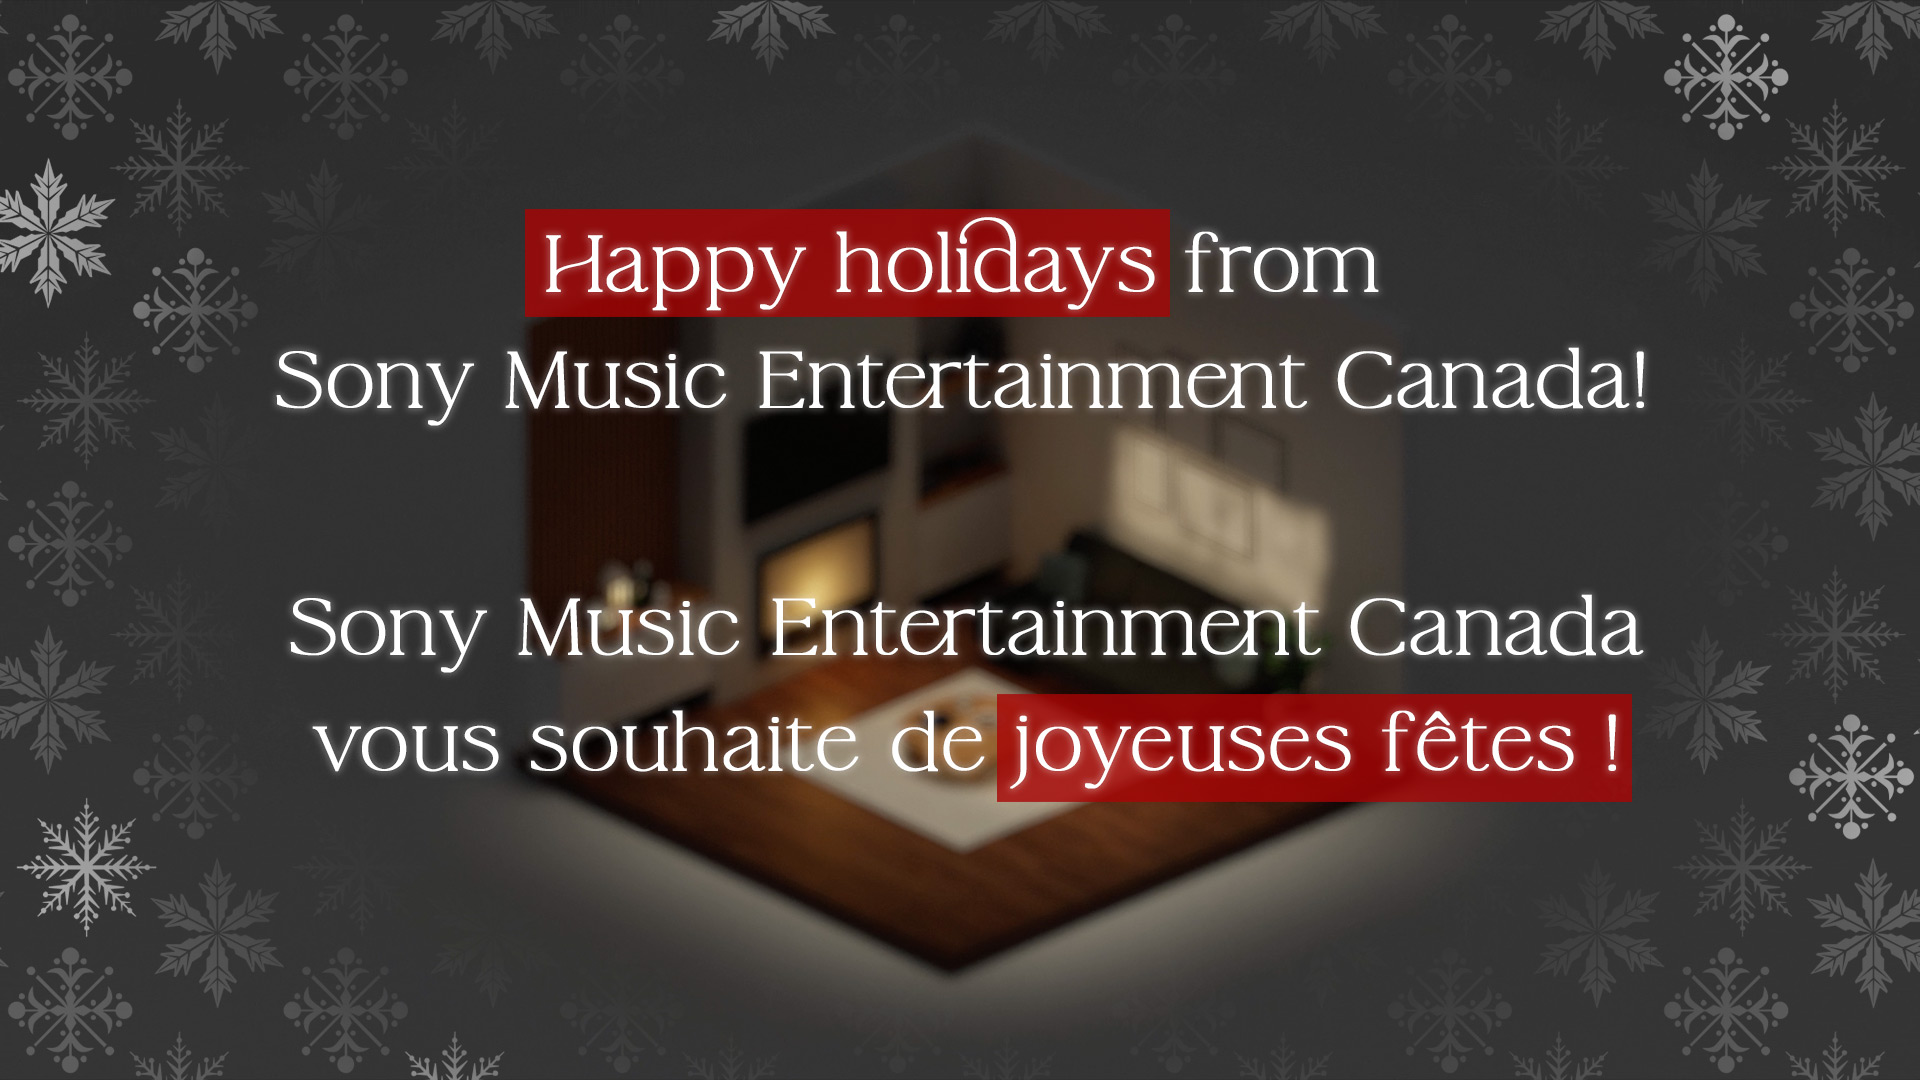 Happy Holidays from Sony Music Entertainment Canada! / Sony Music Entertainment Canada vous souhaite de joyeuses fêtes!